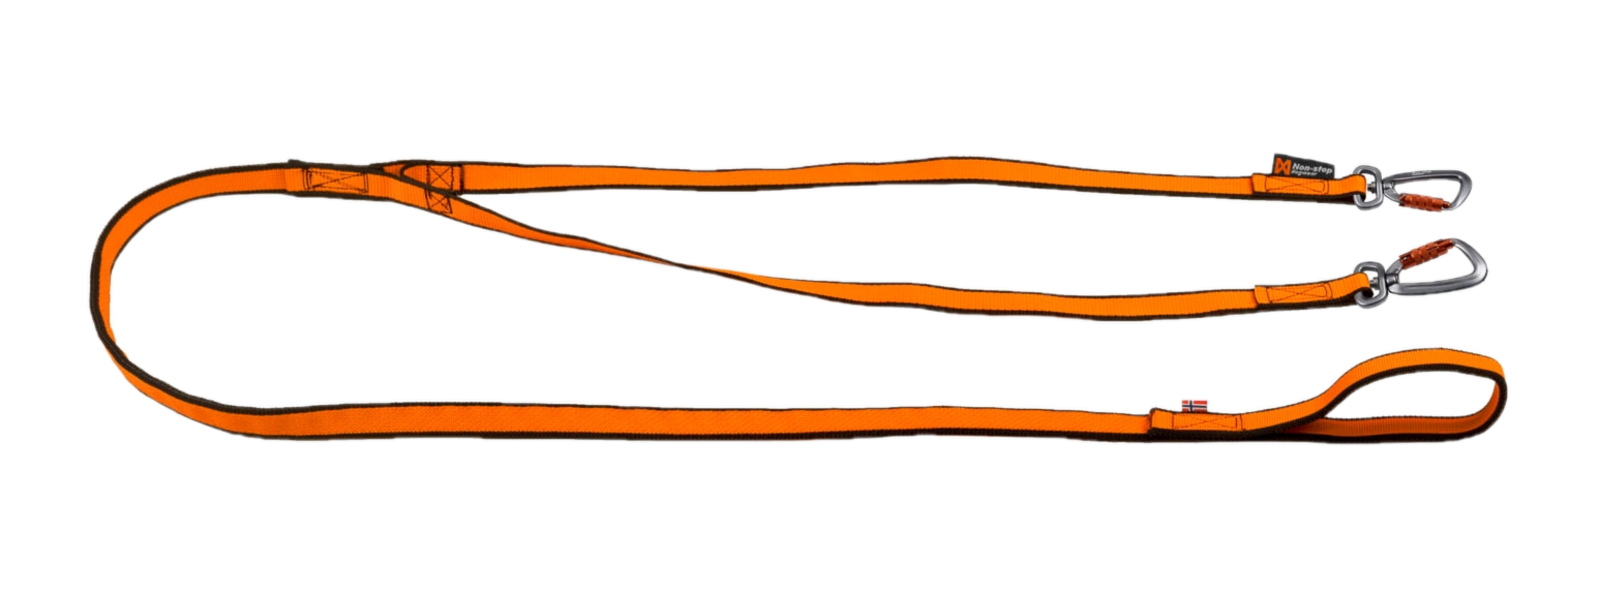 Strikkbånd dobbelt sort/oransje one size - Hund - Halsbånd, kobbel & sele - Hundebånd & hundekobbel - Non-Stop Dogwear